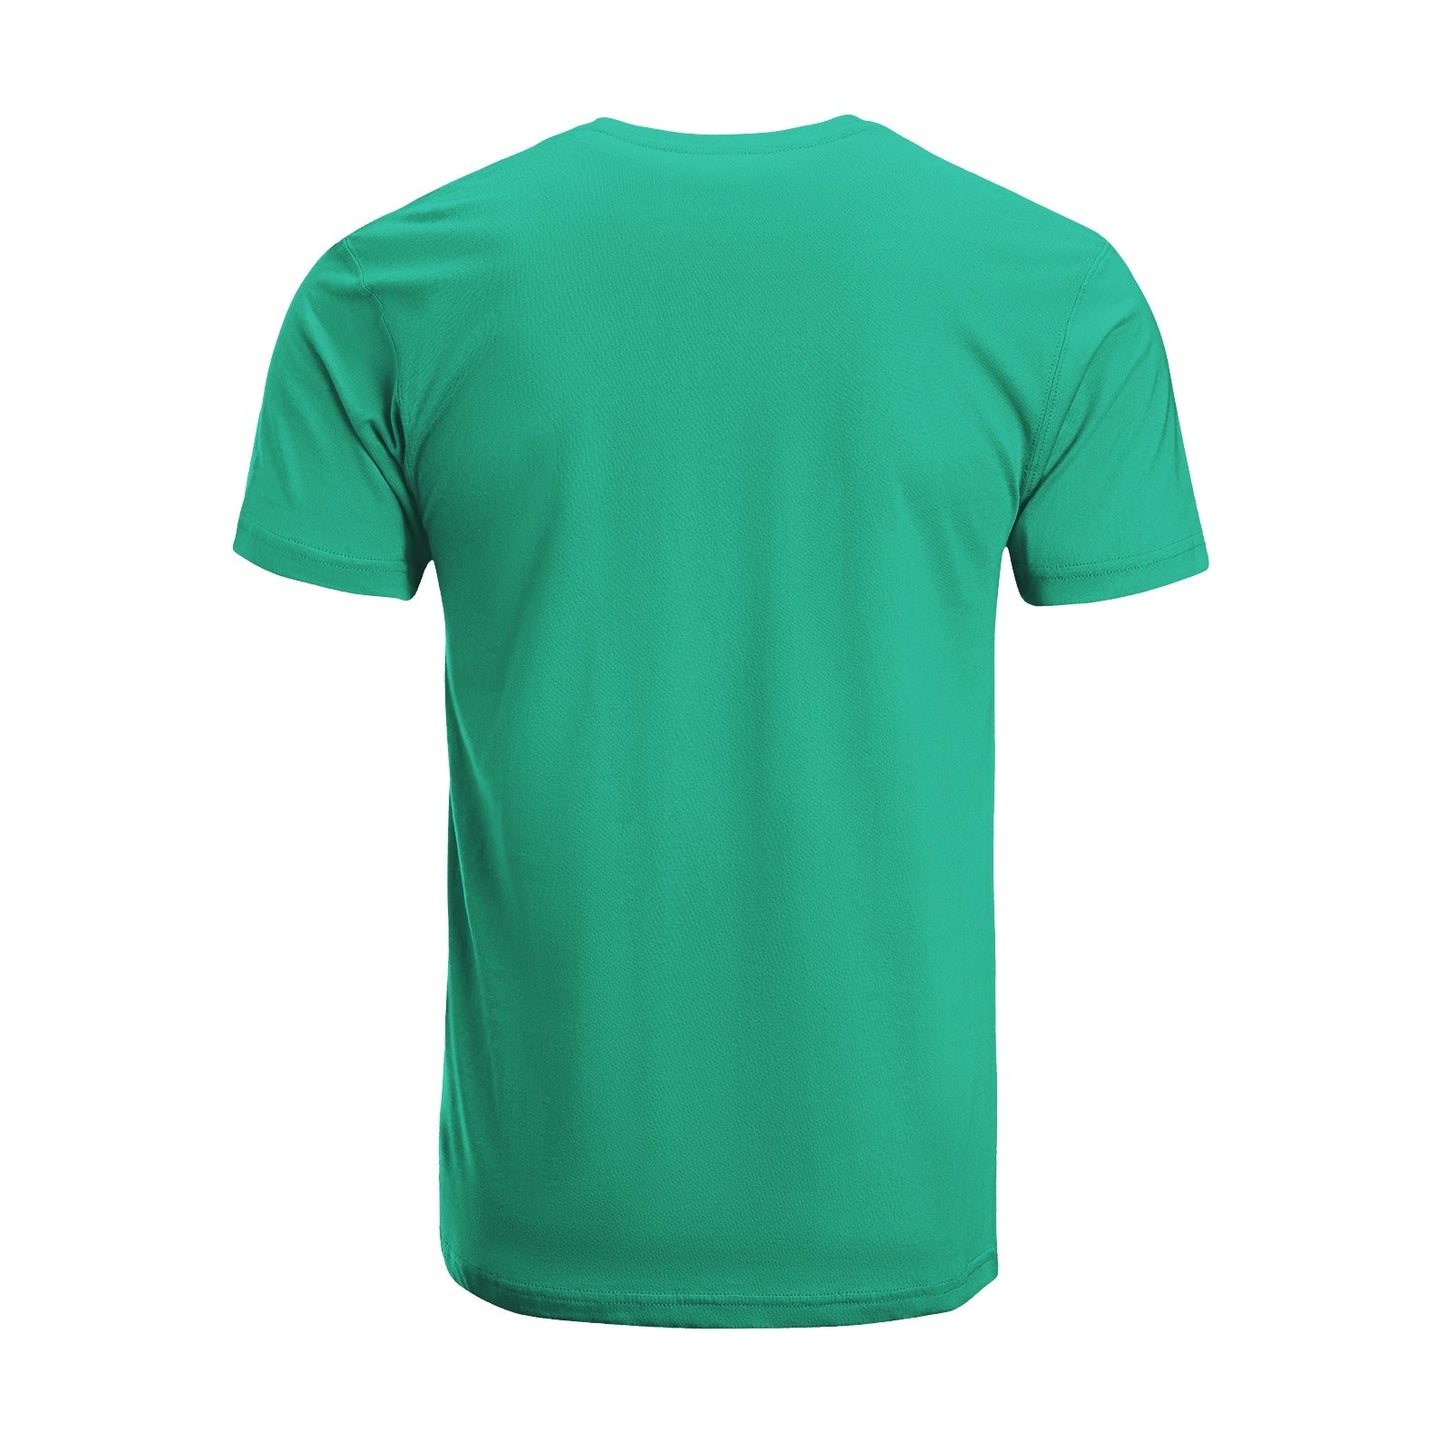 Unisex Short Sleeve Crew Neck Cotton Jersey T-Shirt MOM 09